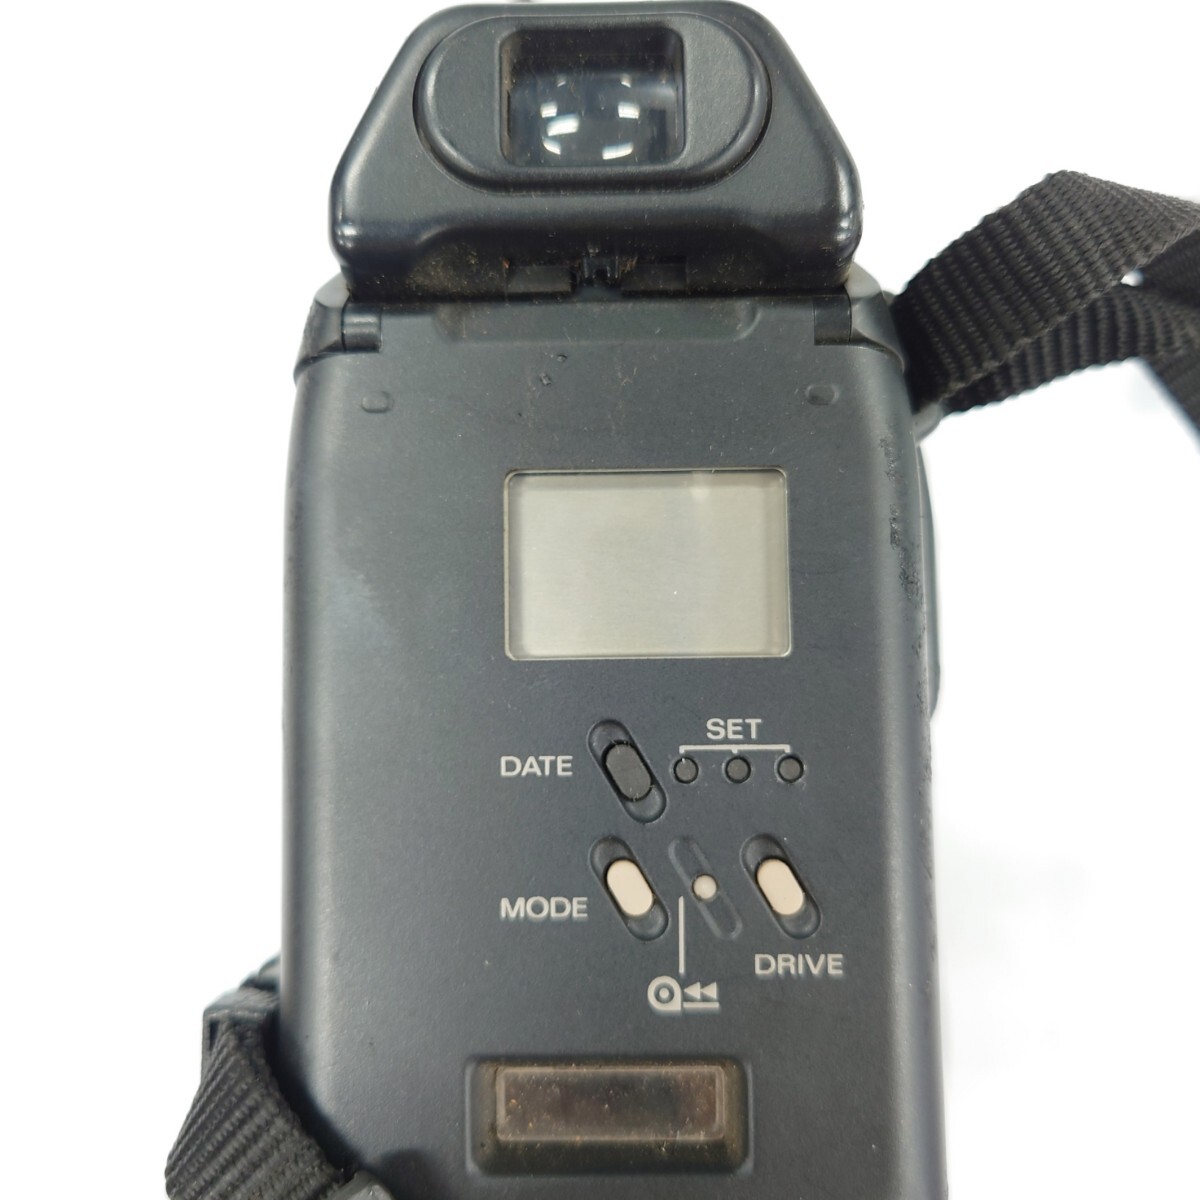 I804 フィルムカメラ KYOCERA SAMURAI ×3.0 AUTOMATIC FOCUSING KYOCERA ZOOM LENS f=25mm-75mm 1:3.5 -4.3 中古 ジャンク品 訳あり_画像7